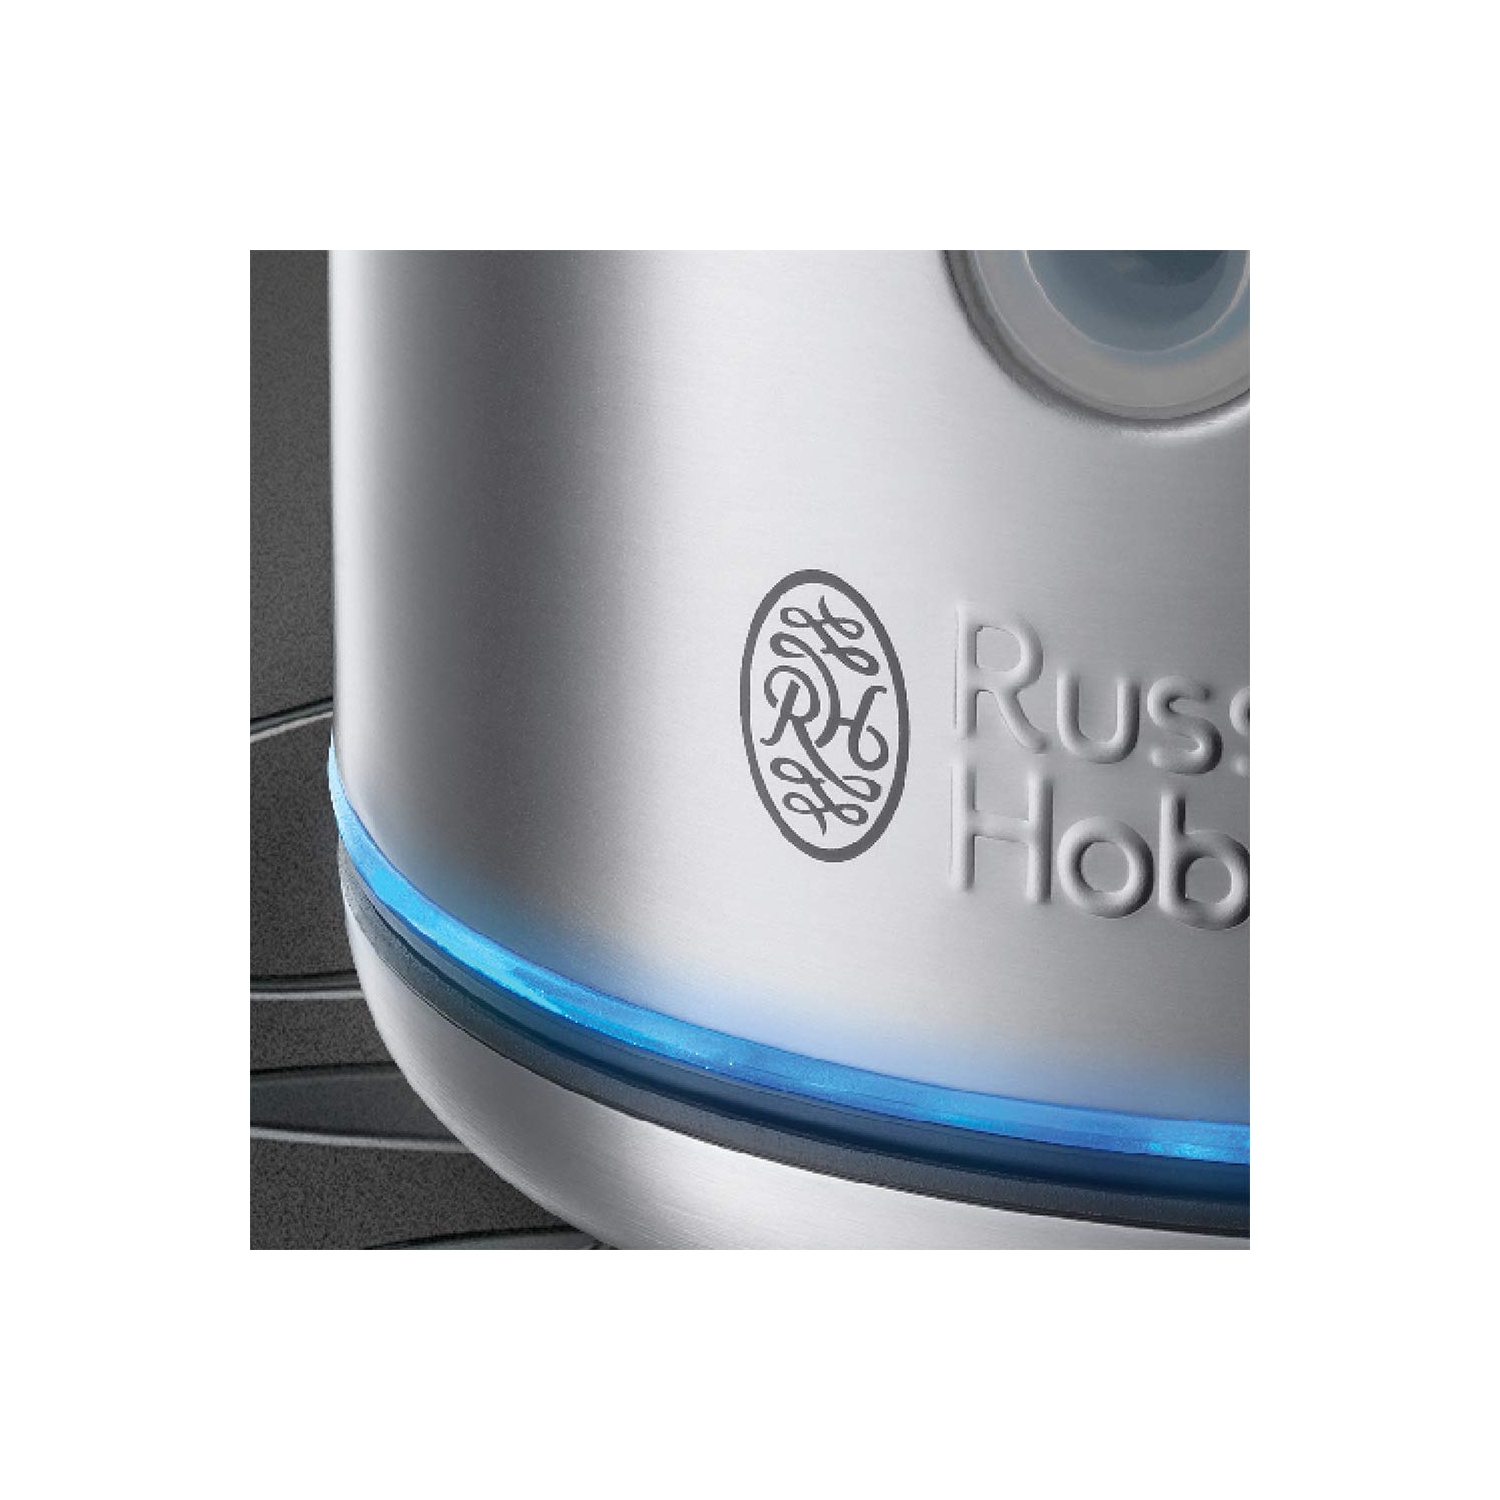 russell hobbs 20460 buckingham quiet boil kettle